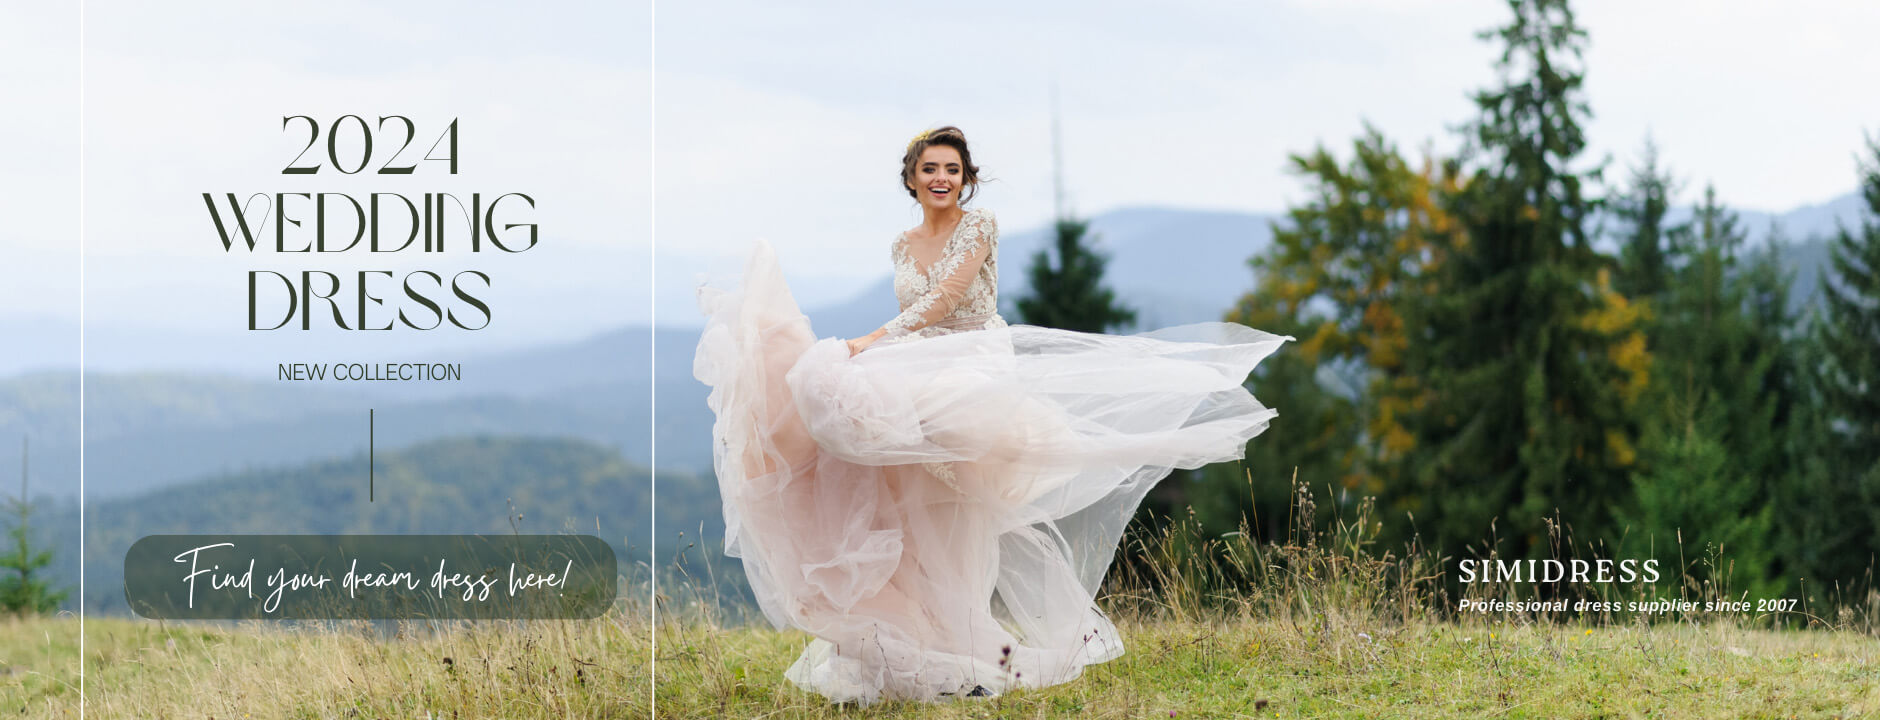 Lace wedding dress | cheap wedding dresses | bridal gowns | simidress.com